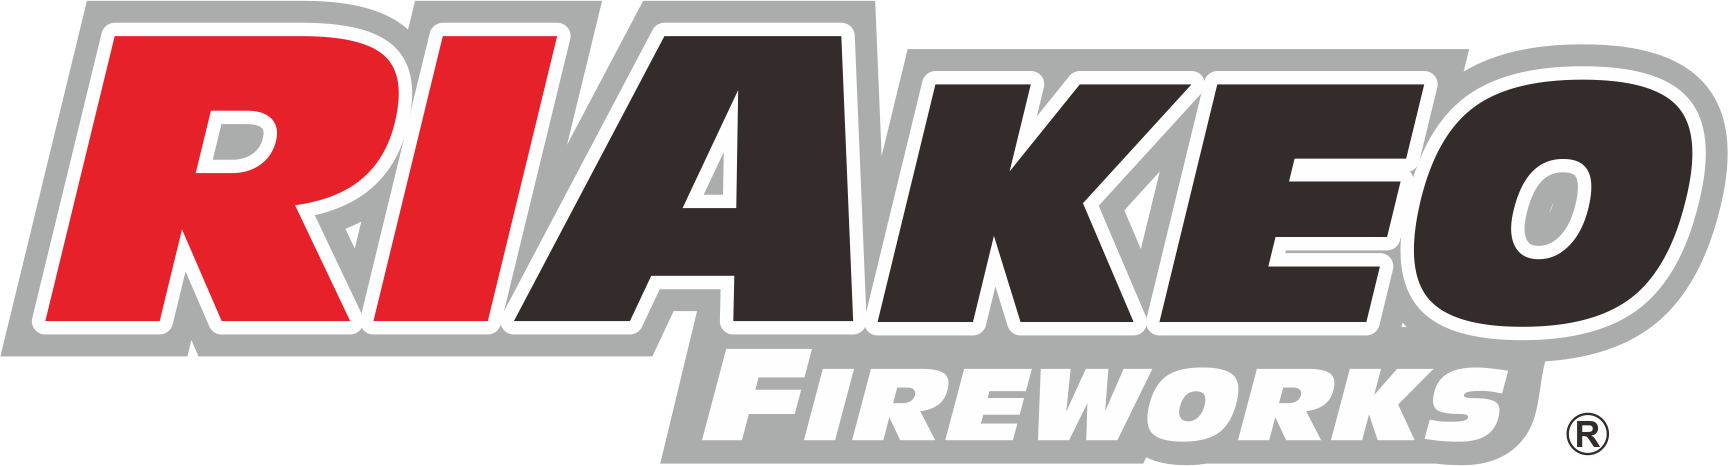 RIAKEO-FIREWORKS-Logo